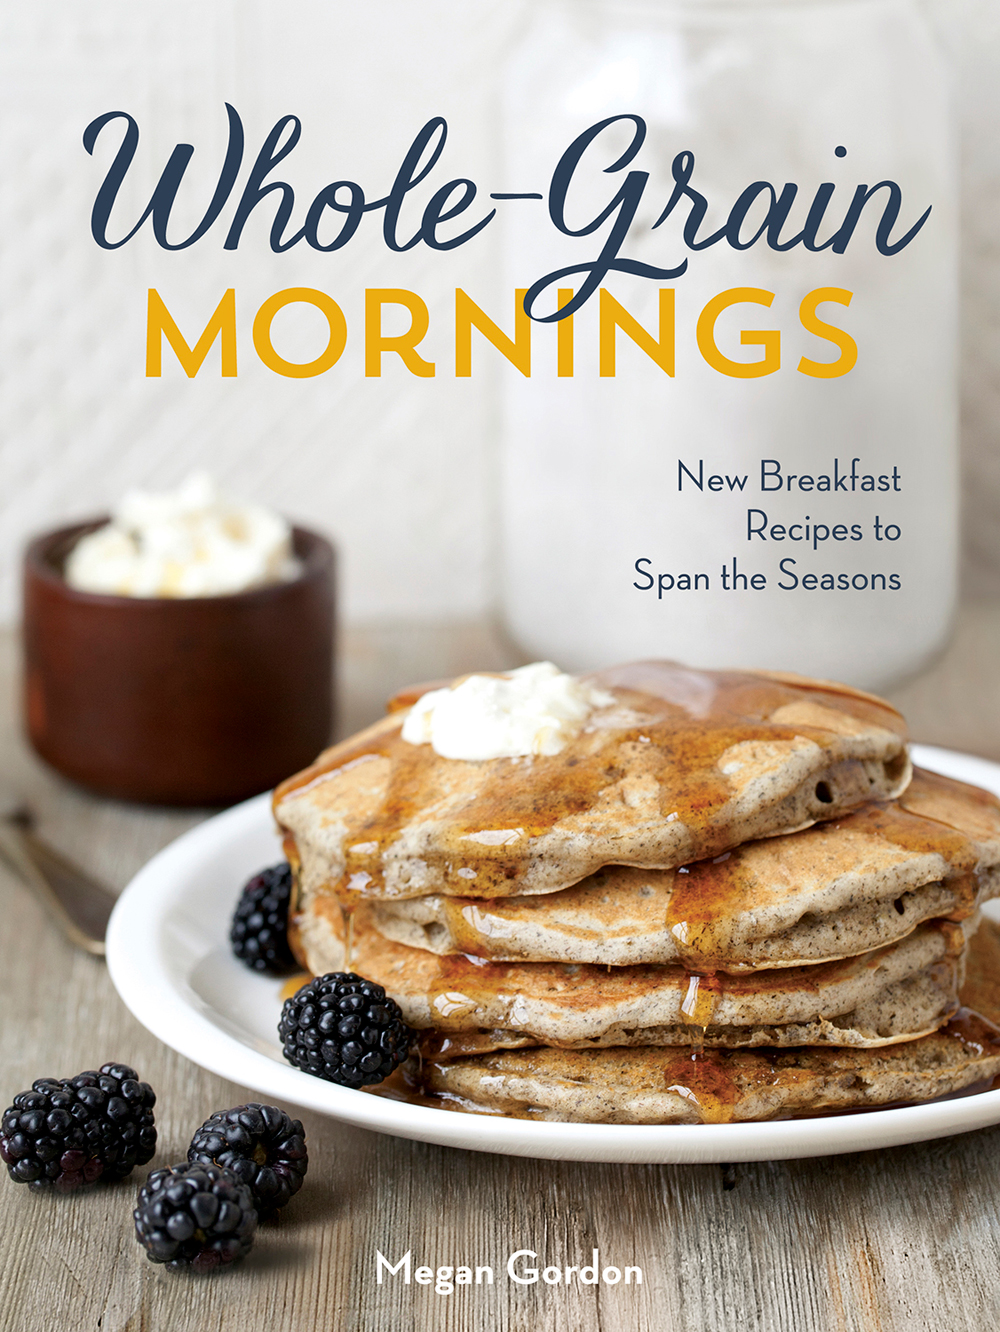 Whole-Grain Mornings: New Breakfast Recipes to Span the Seasons. Author: Megan Gordon